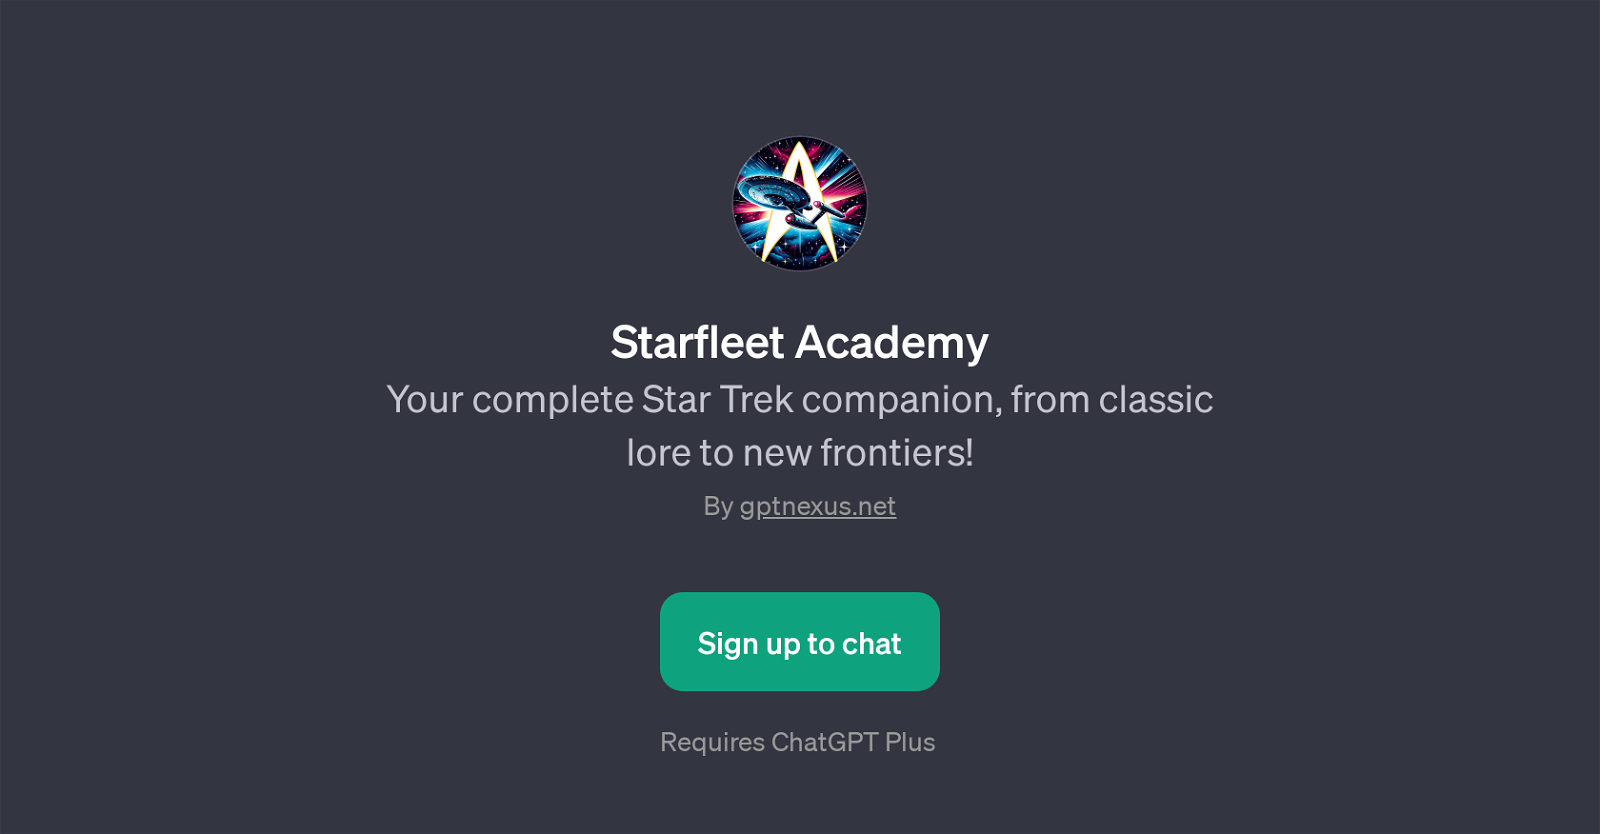 Starfleet Academy website